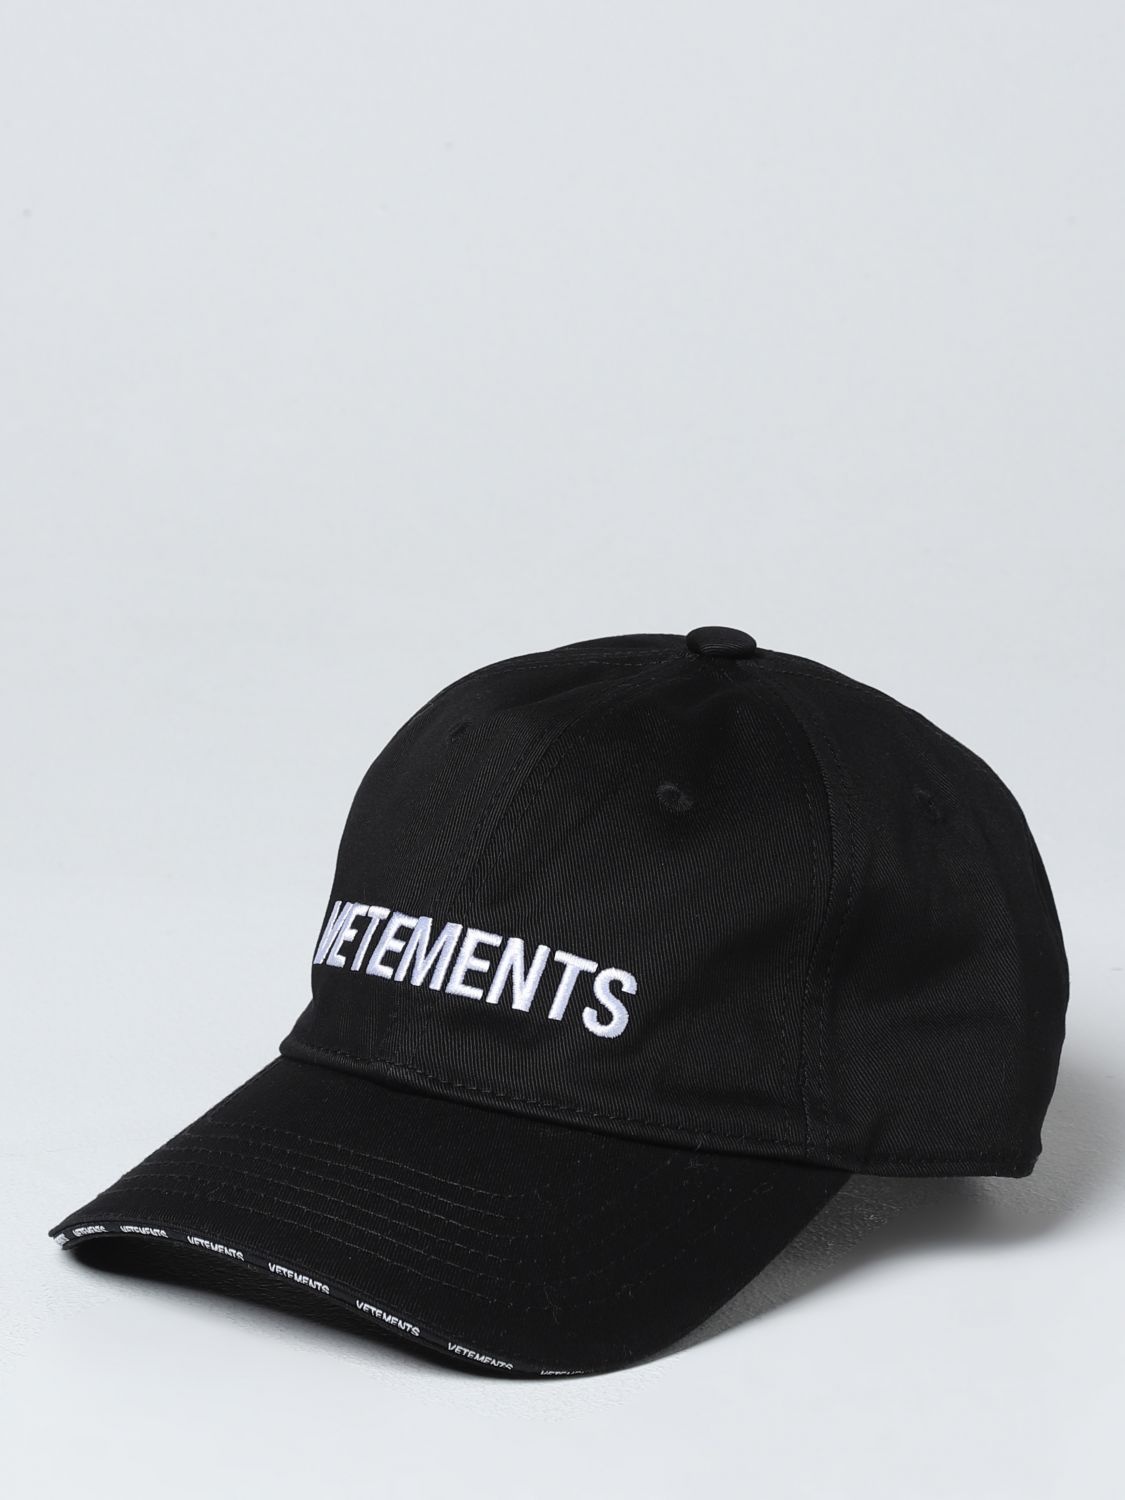 Vetements hat for man - 1